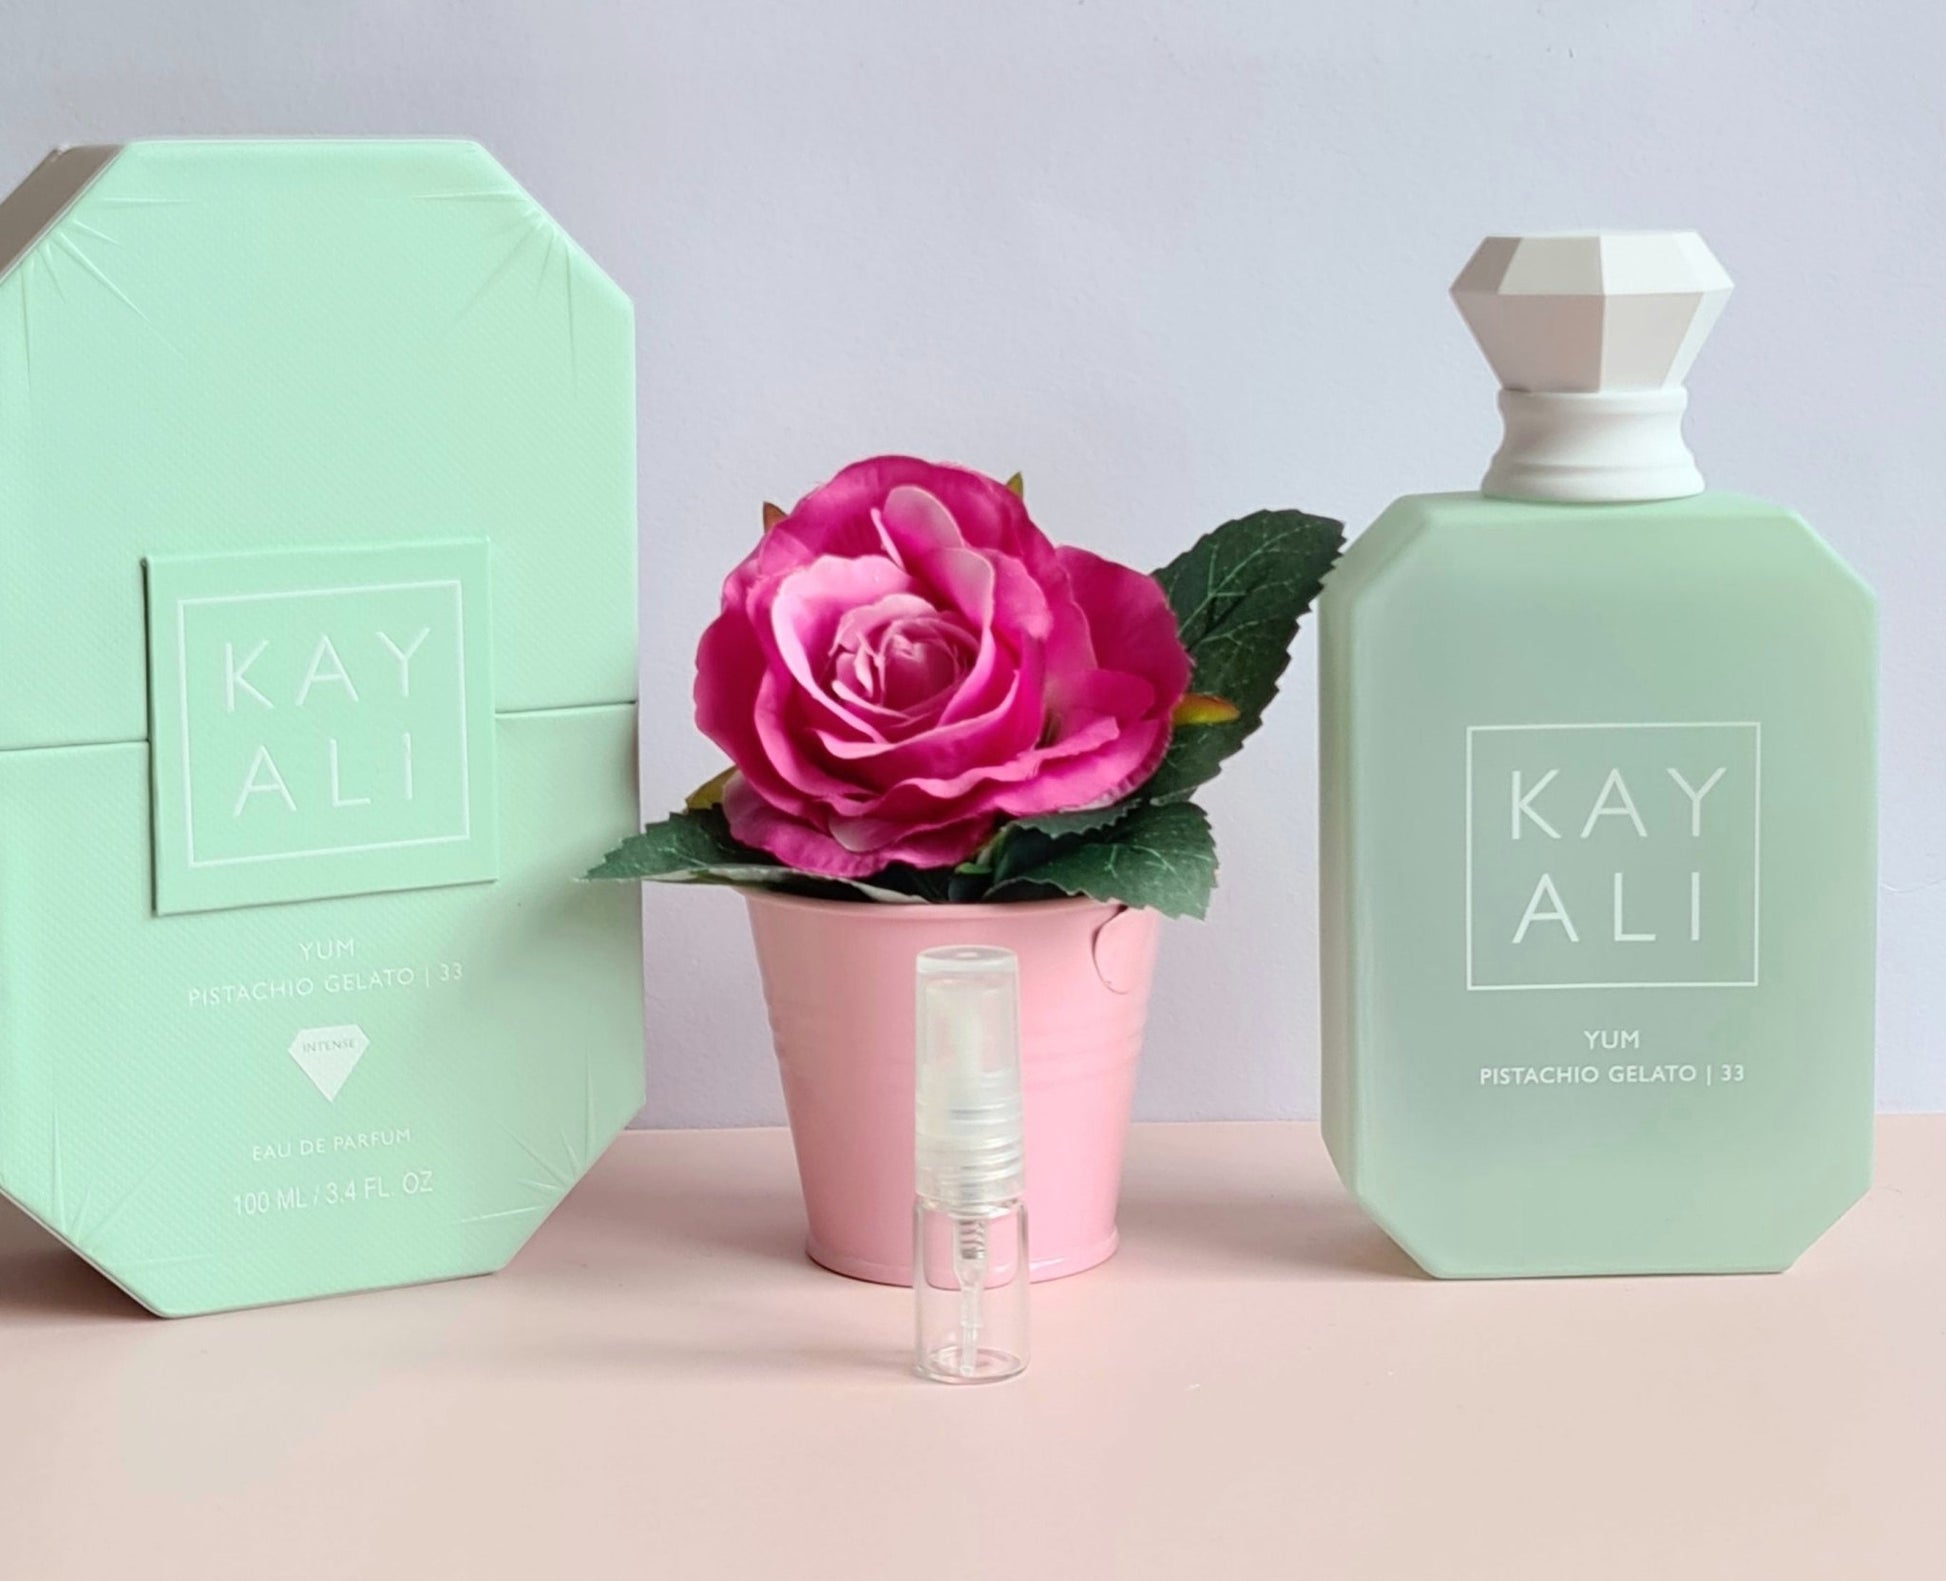 Kayali Yum Pistachio Gelato 33 EDP sample perfume decant spray. 💚🌺💚 –  Thewayfarerscents